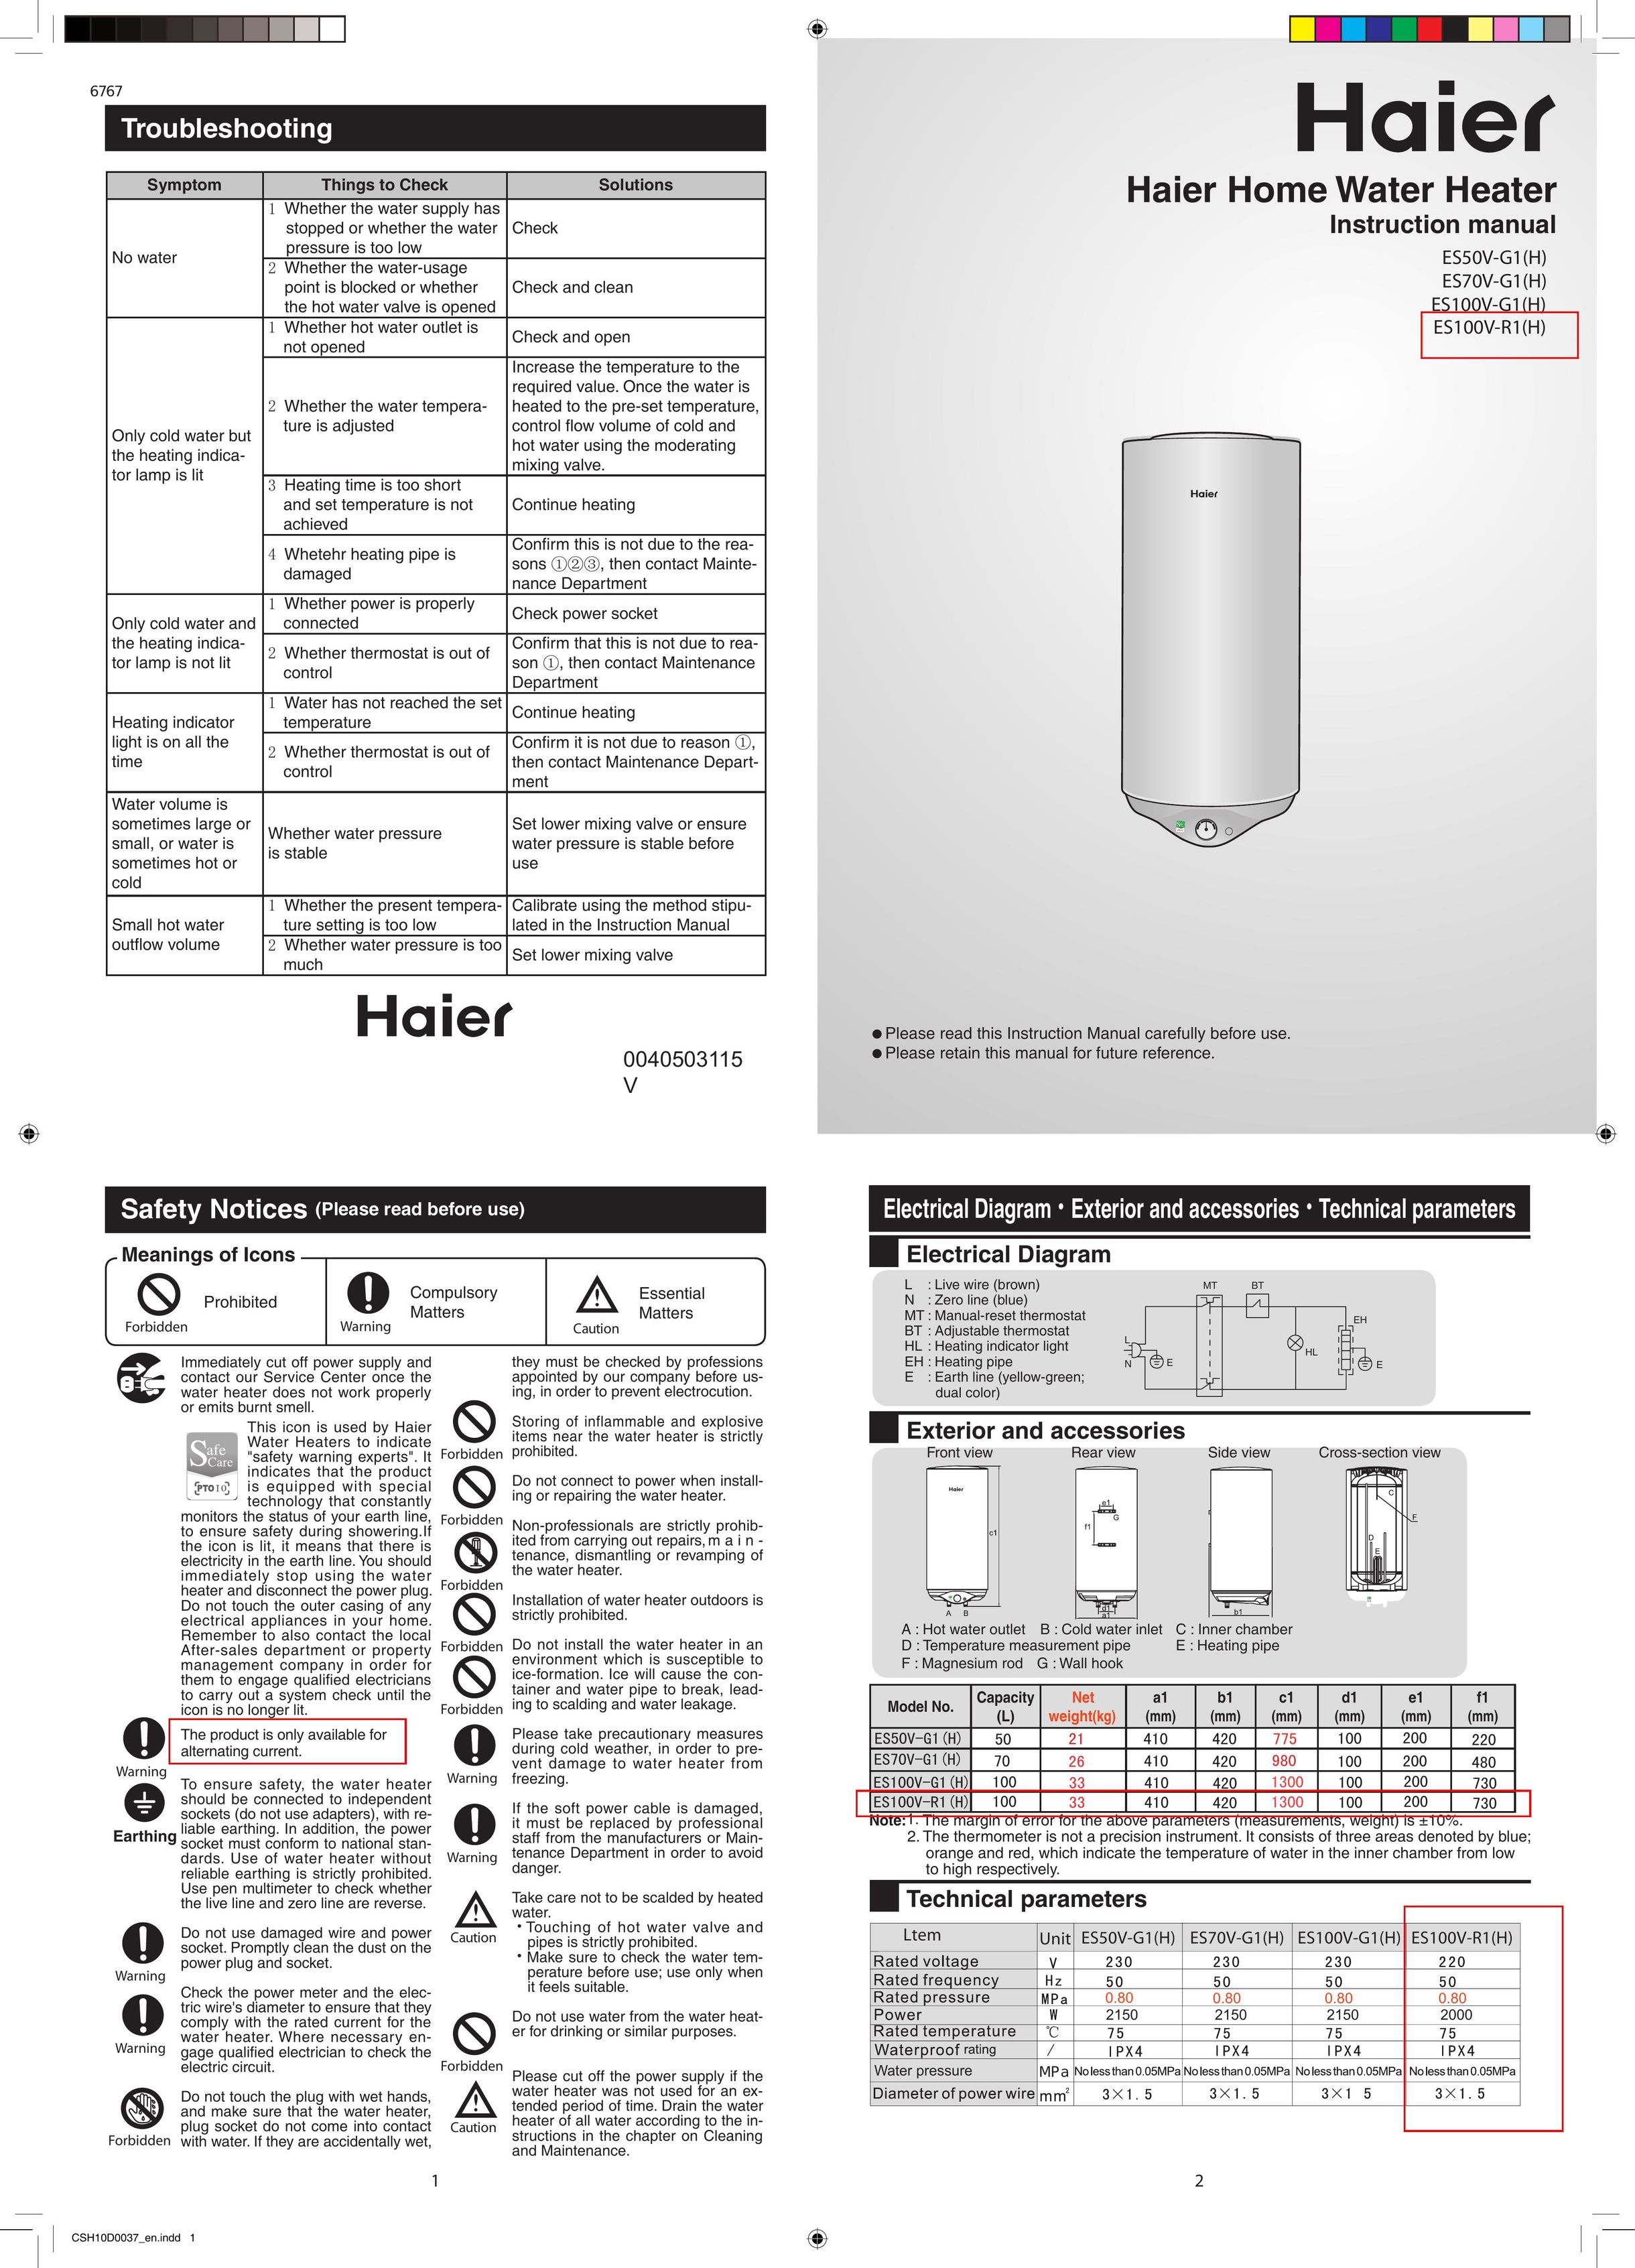 Haier ES100V-R1(H) Water Heater User Manual